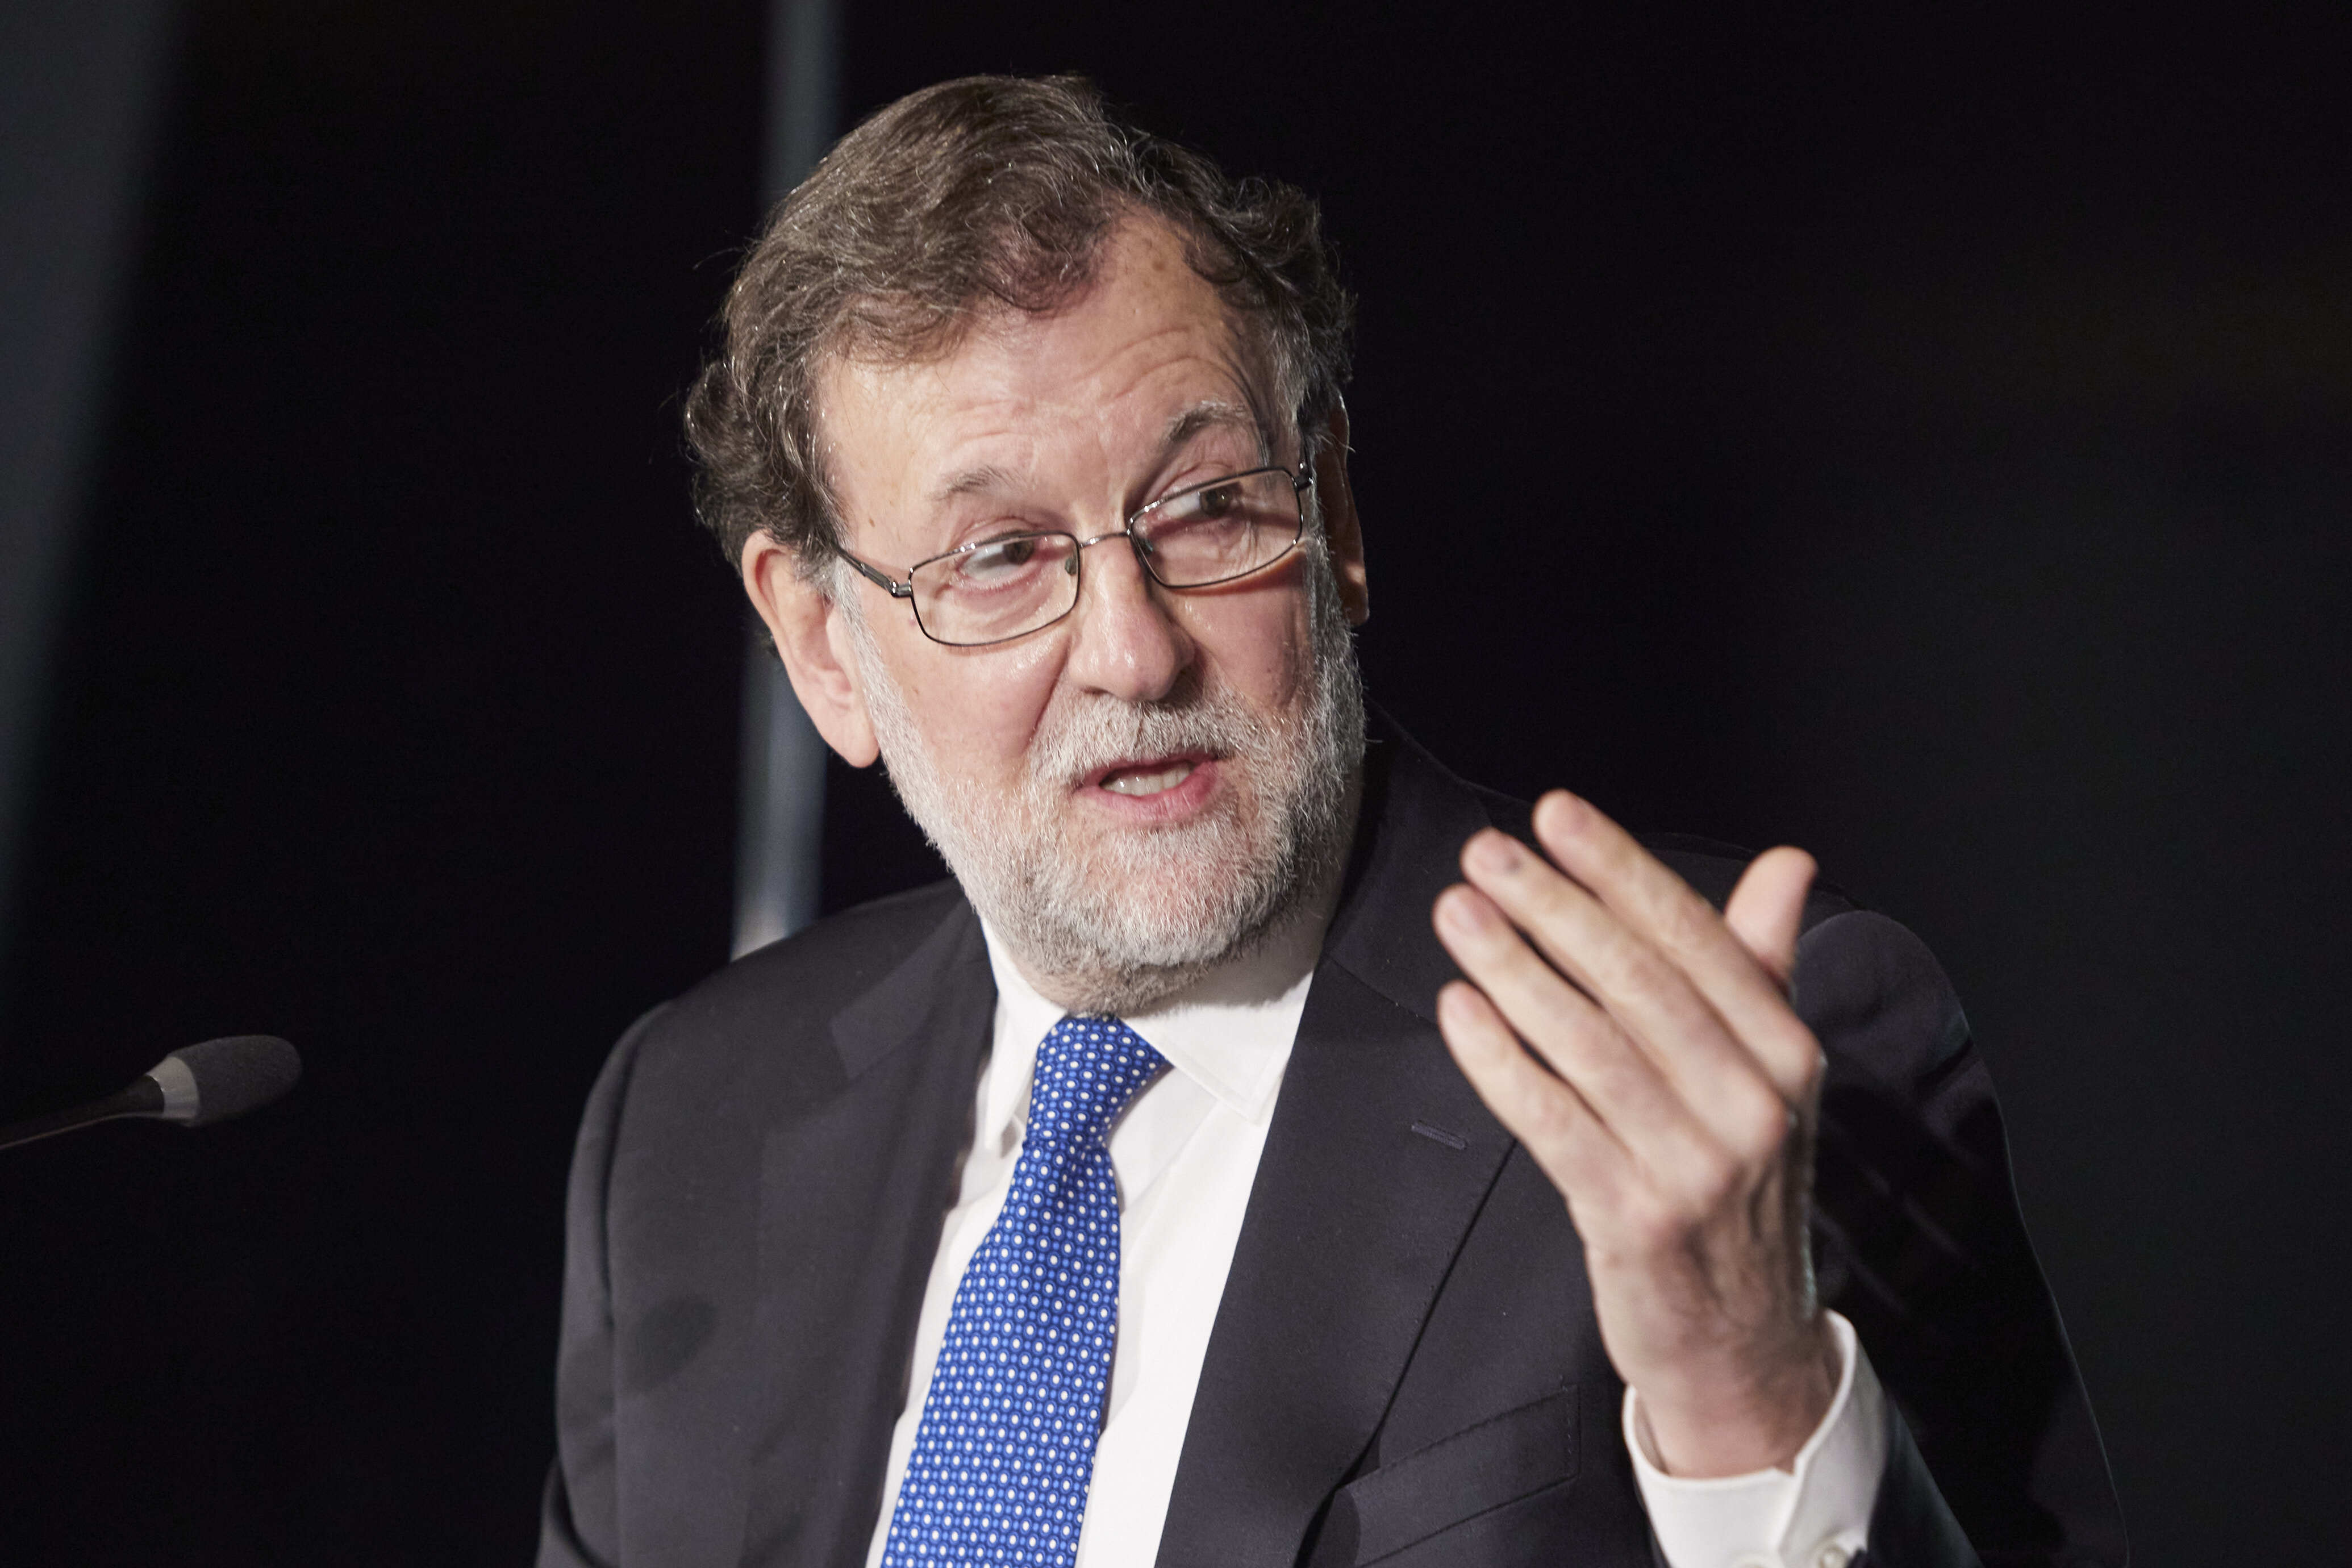 Expresidente del Gobierno Mariano Rajoy presentación libro política adultos Sevilla / Foto: Europa Press